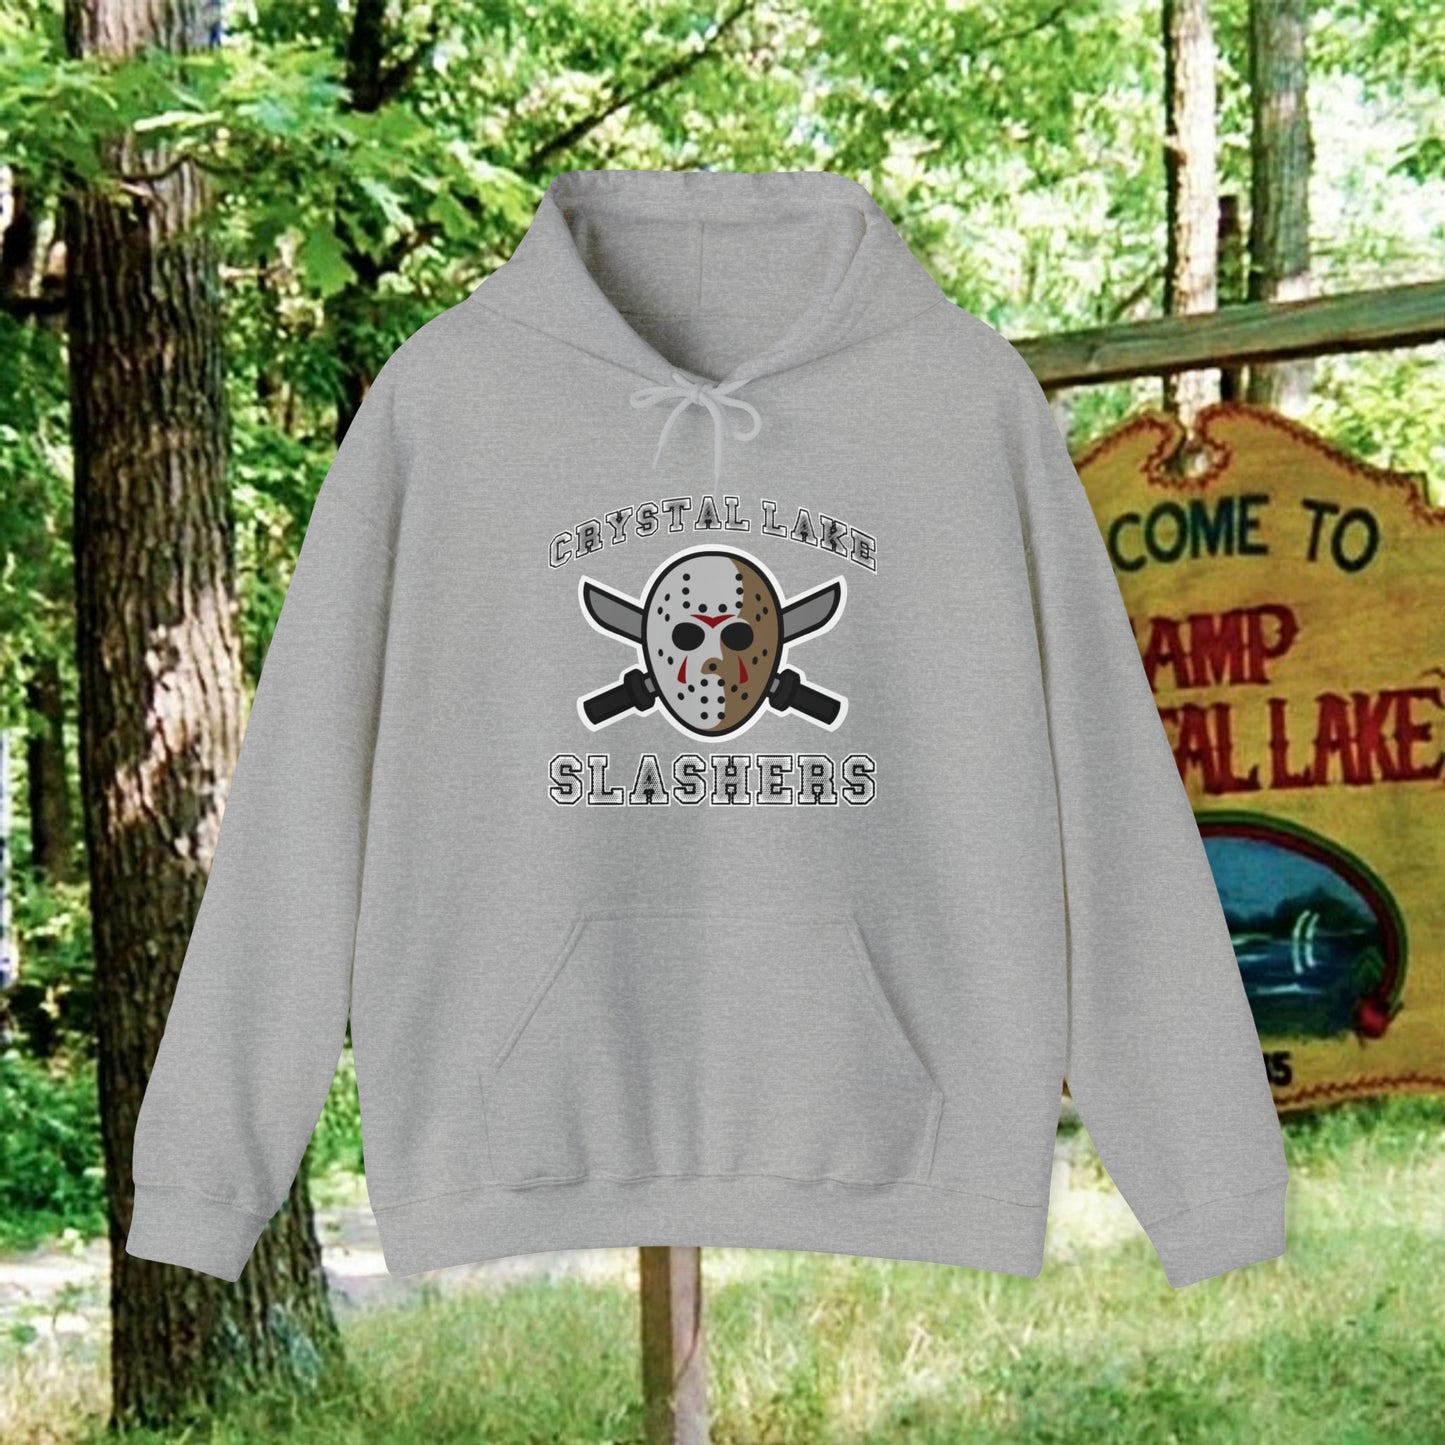 Crystal Lake Slashers Hooded Sweatshirt